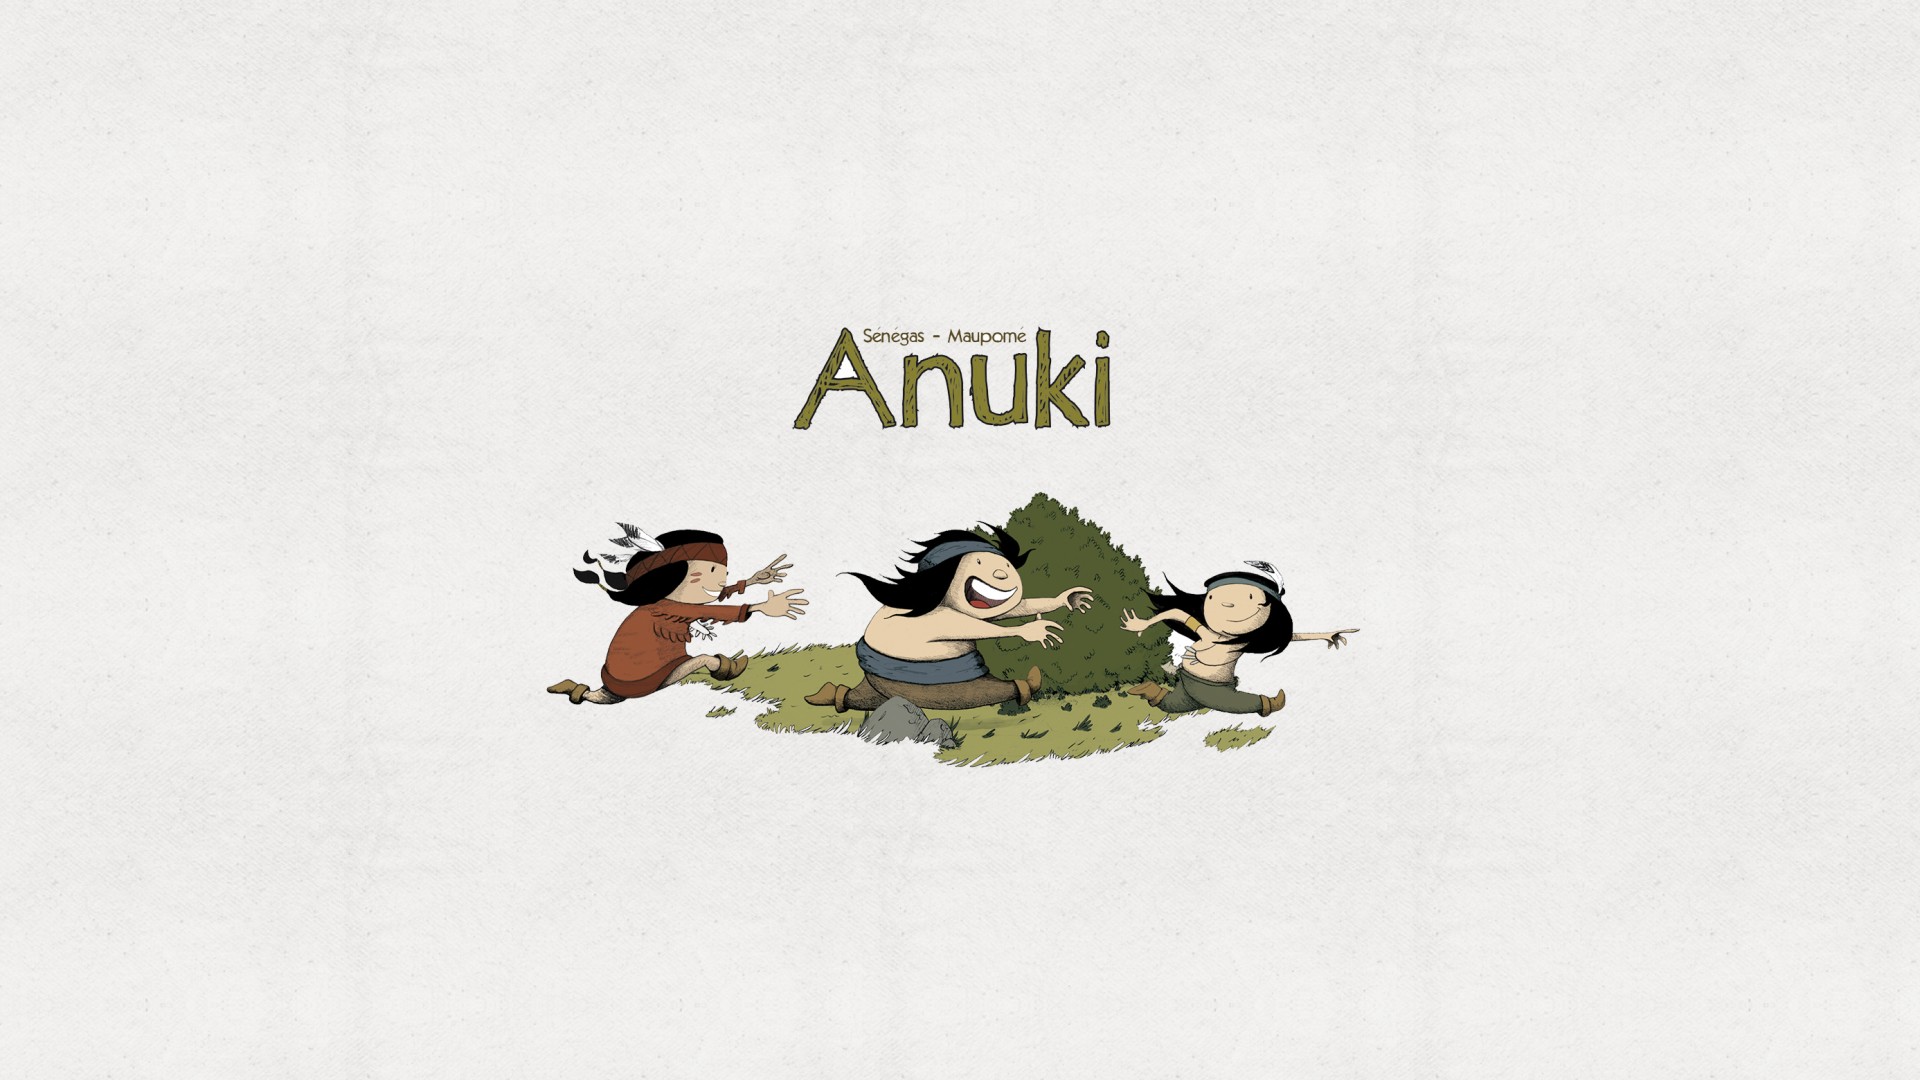 Anuki